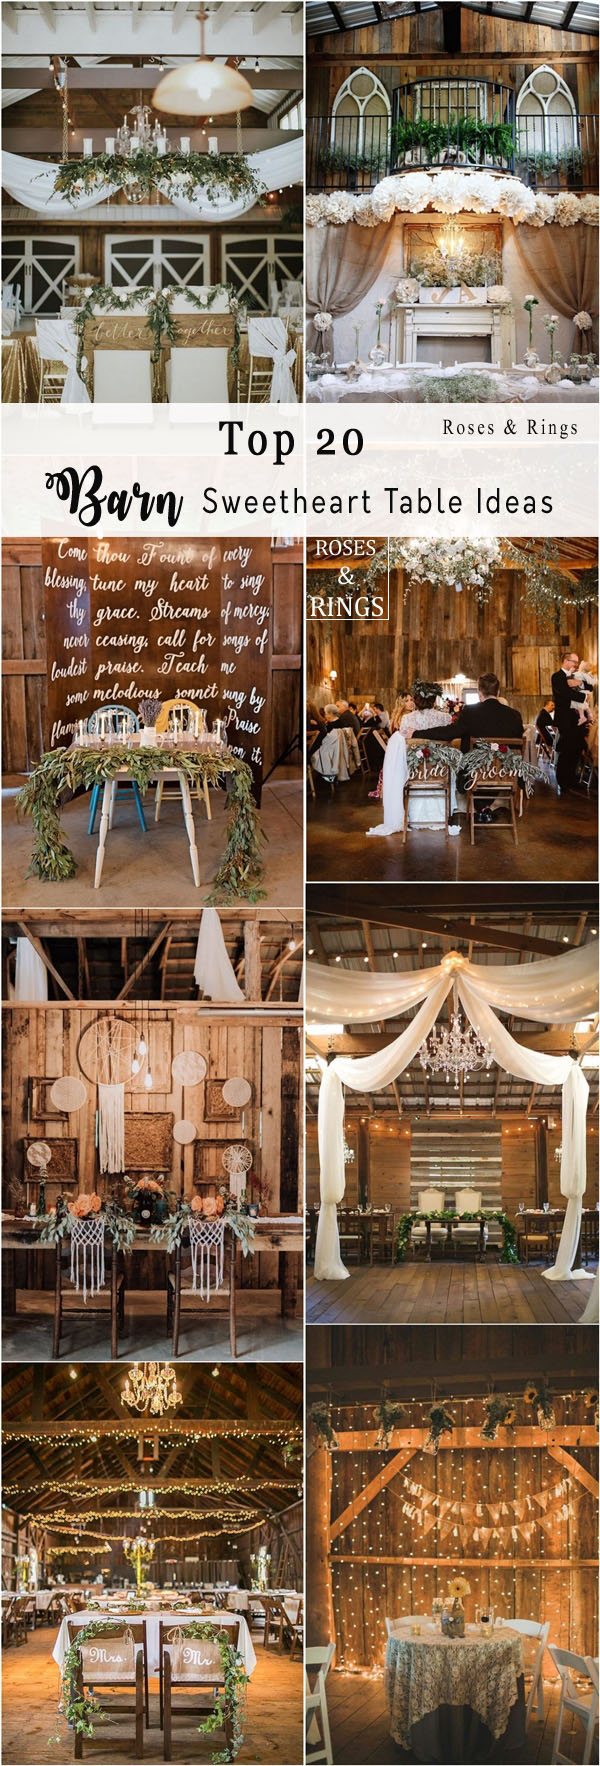 rustic country wedding ideas - barn wedding swetheart table ideas